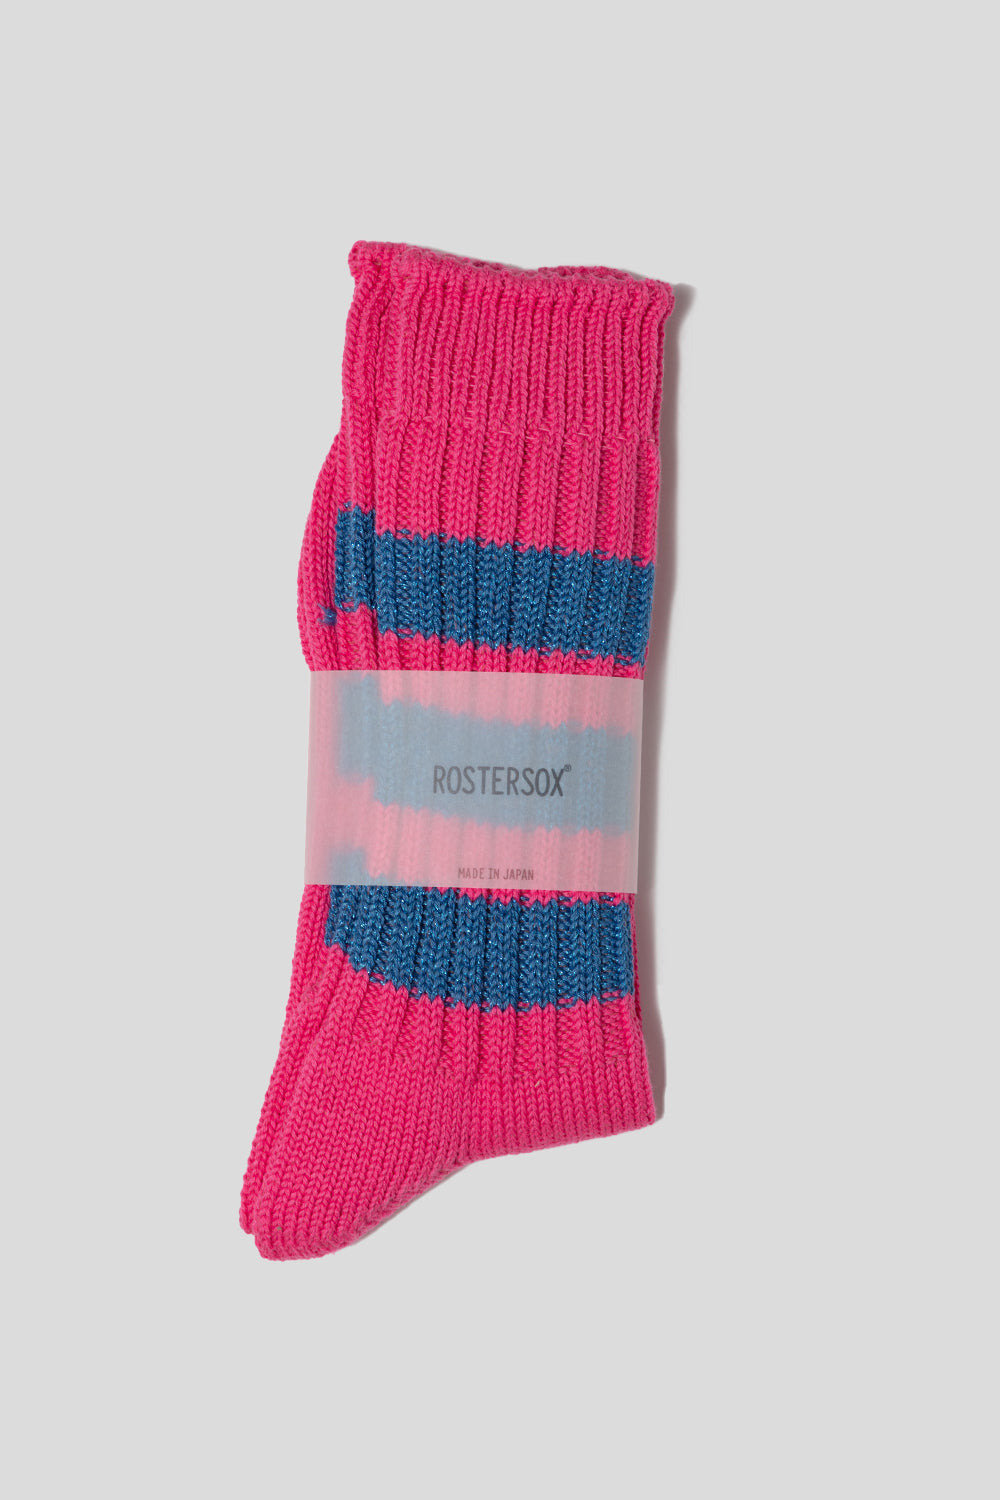 Rostersox Boston Socks in Pink